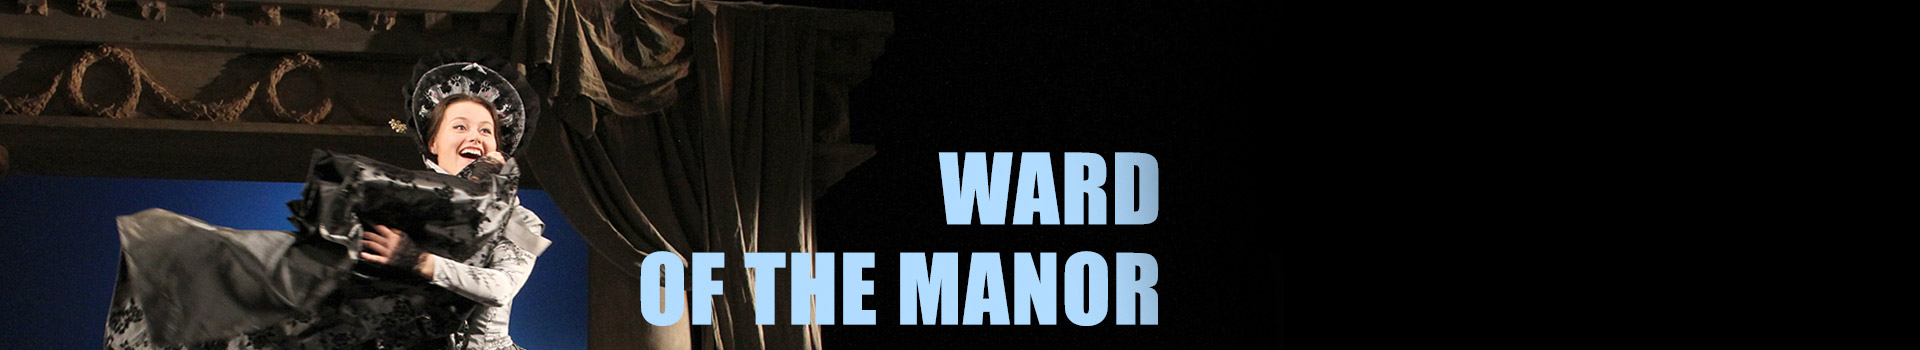 Ward of the Manor - National Theatre of Kiev Season banner image